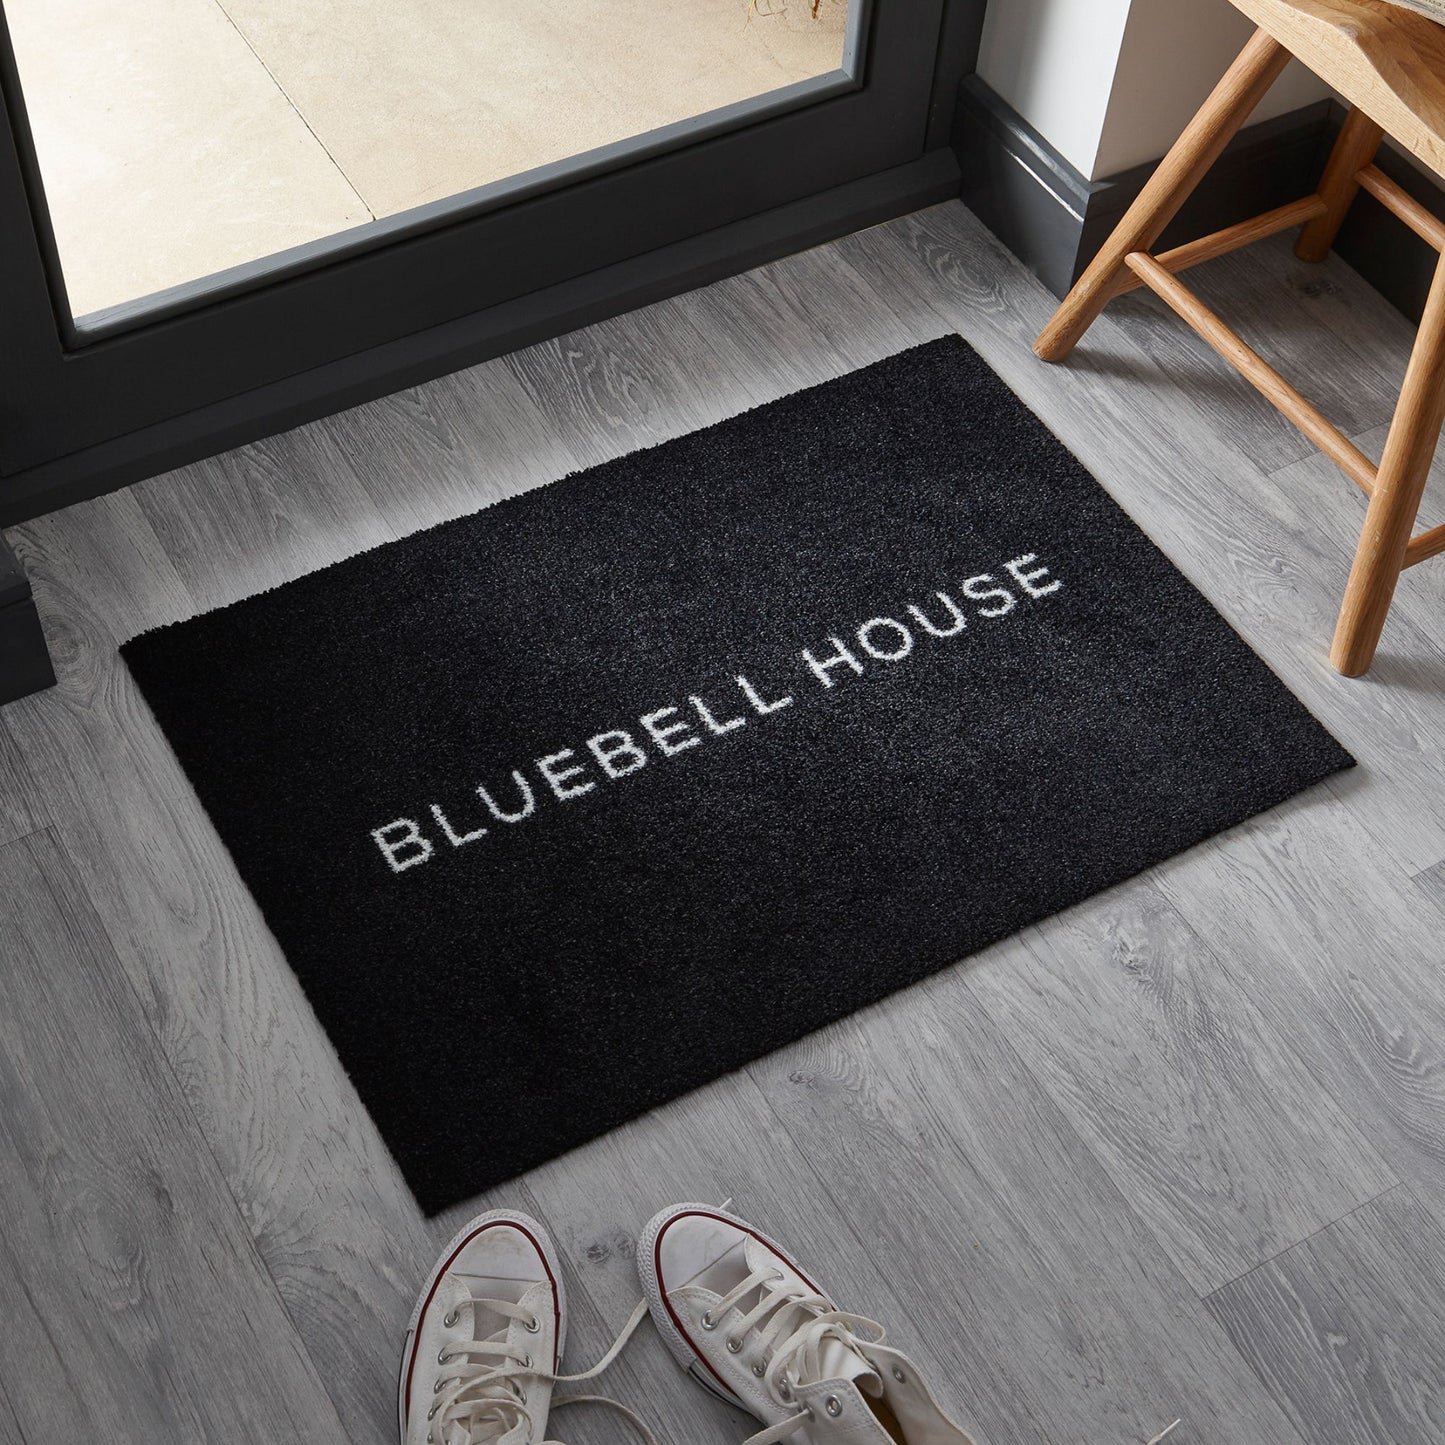 Personalised Doormat